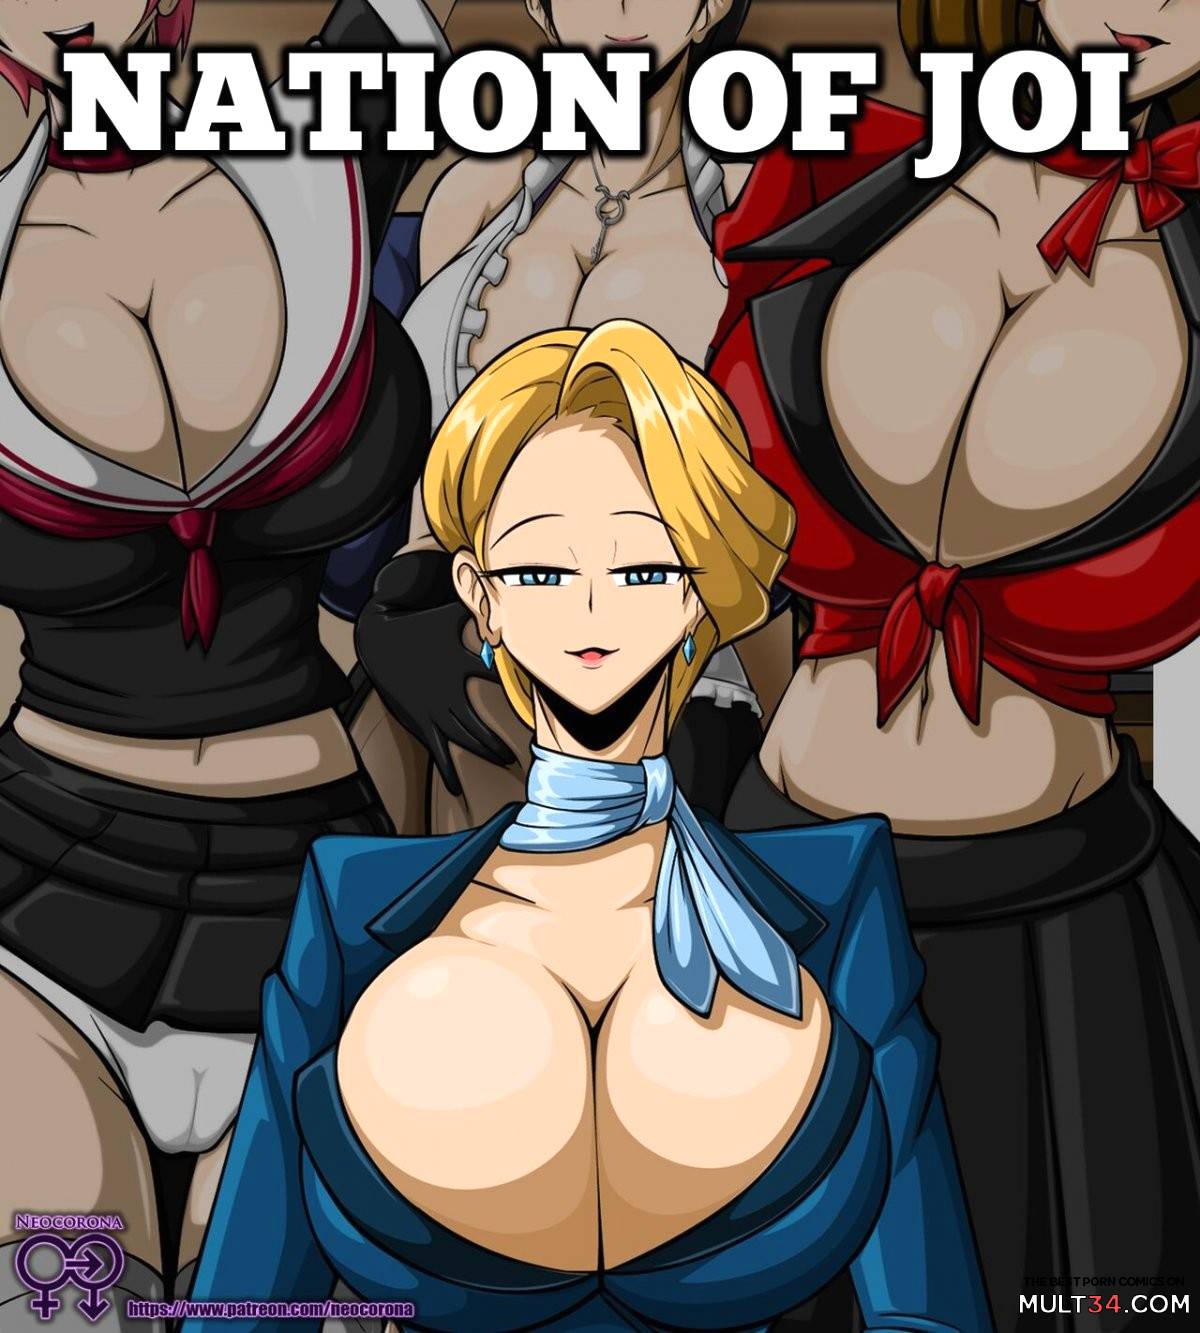 Nation of JOI porn comic - the best cartoon porn comics, Rule 34 | MULT34